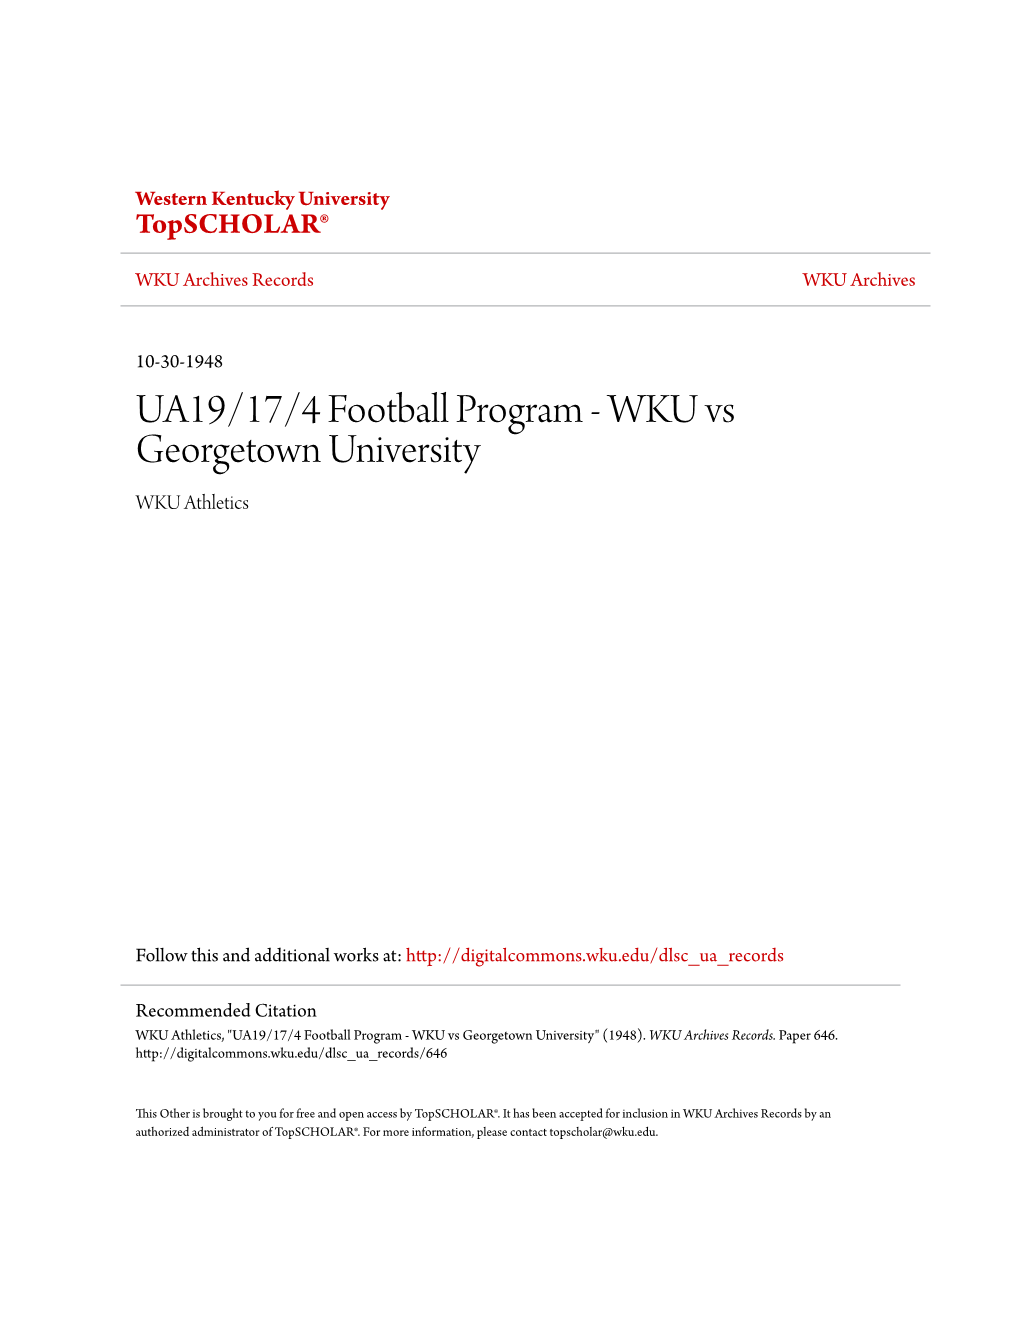 UA19/17/4 Football Program-WKU Vs Georgetown University